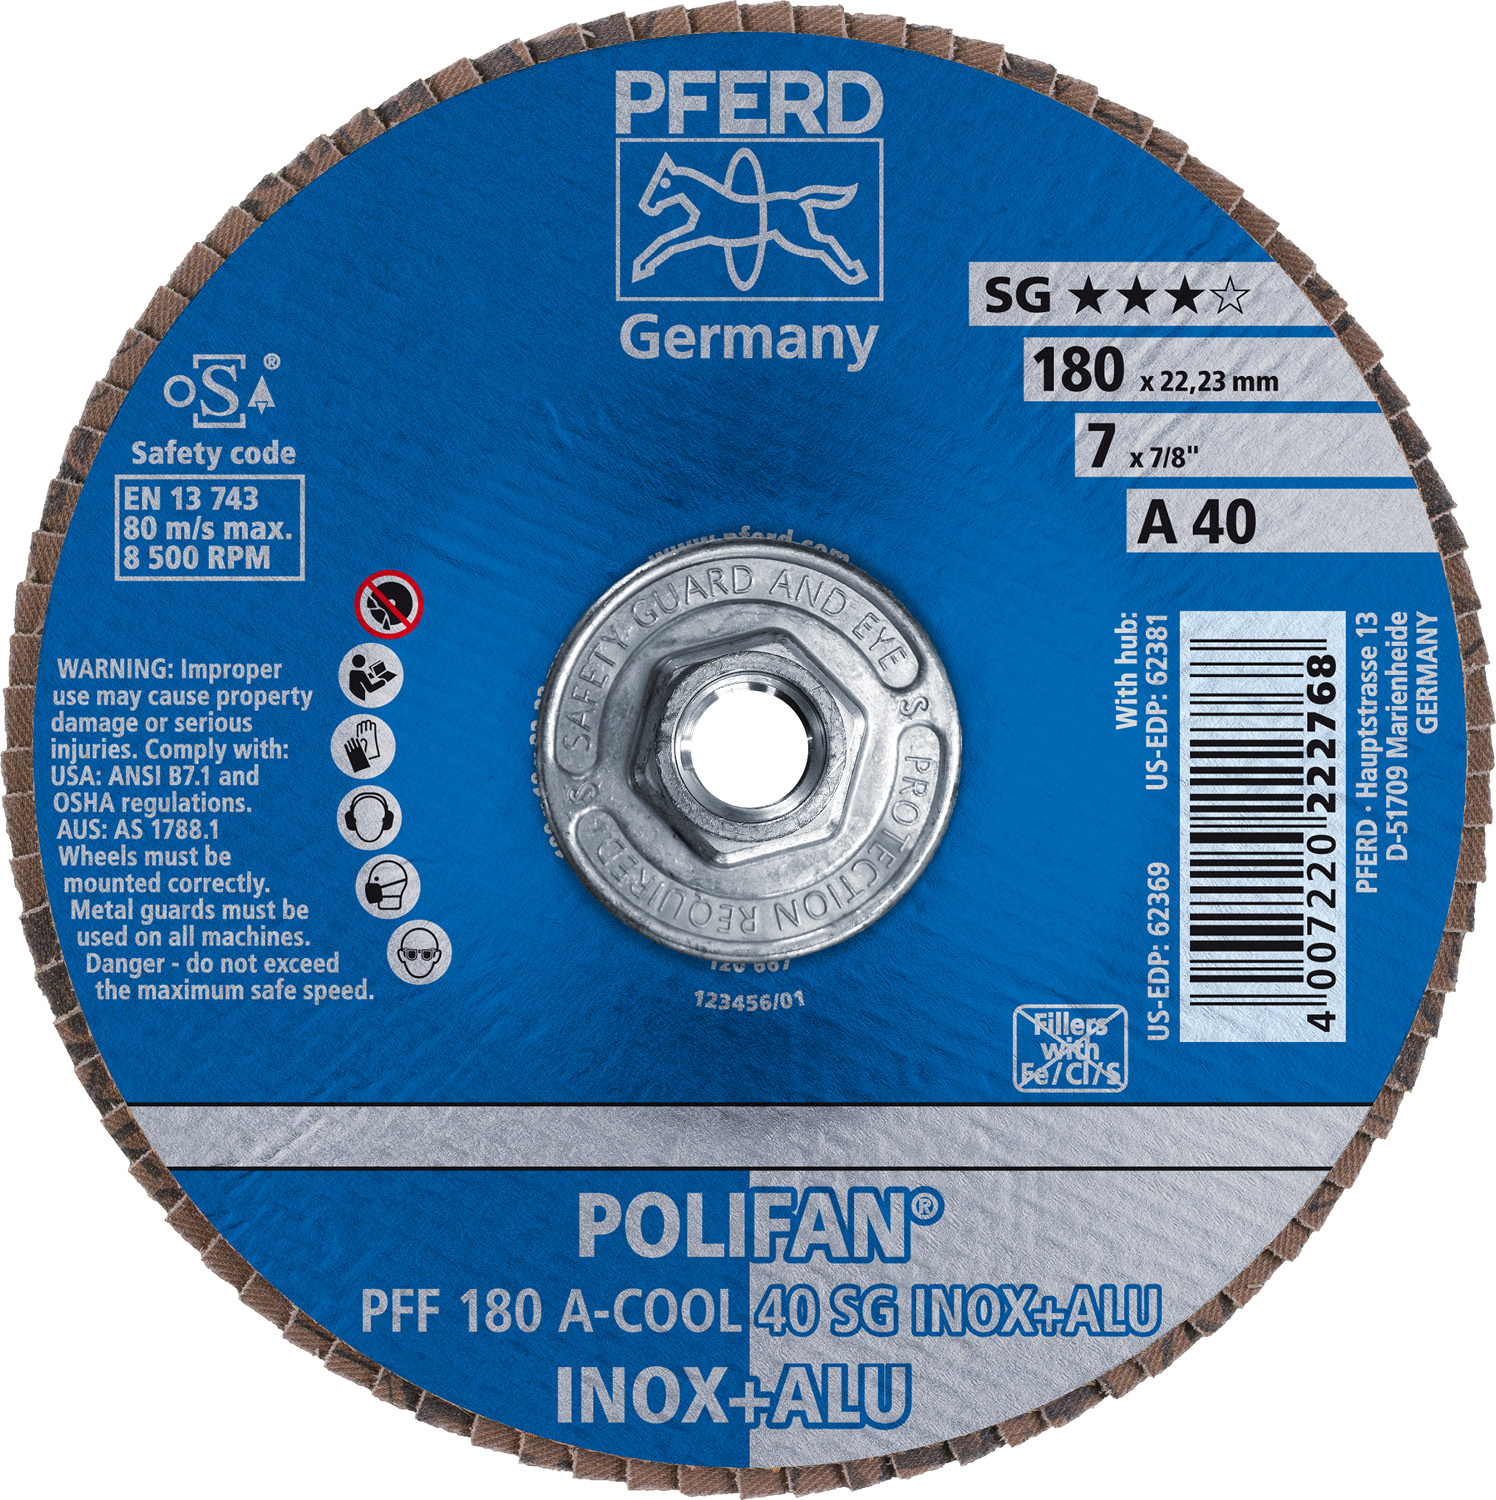 7" x 5/8-11 Thd. POLIFAN® Flap Disc, A-COOL SG INOX+ALU, Aluminum Oxide, 40 Grit, Flat